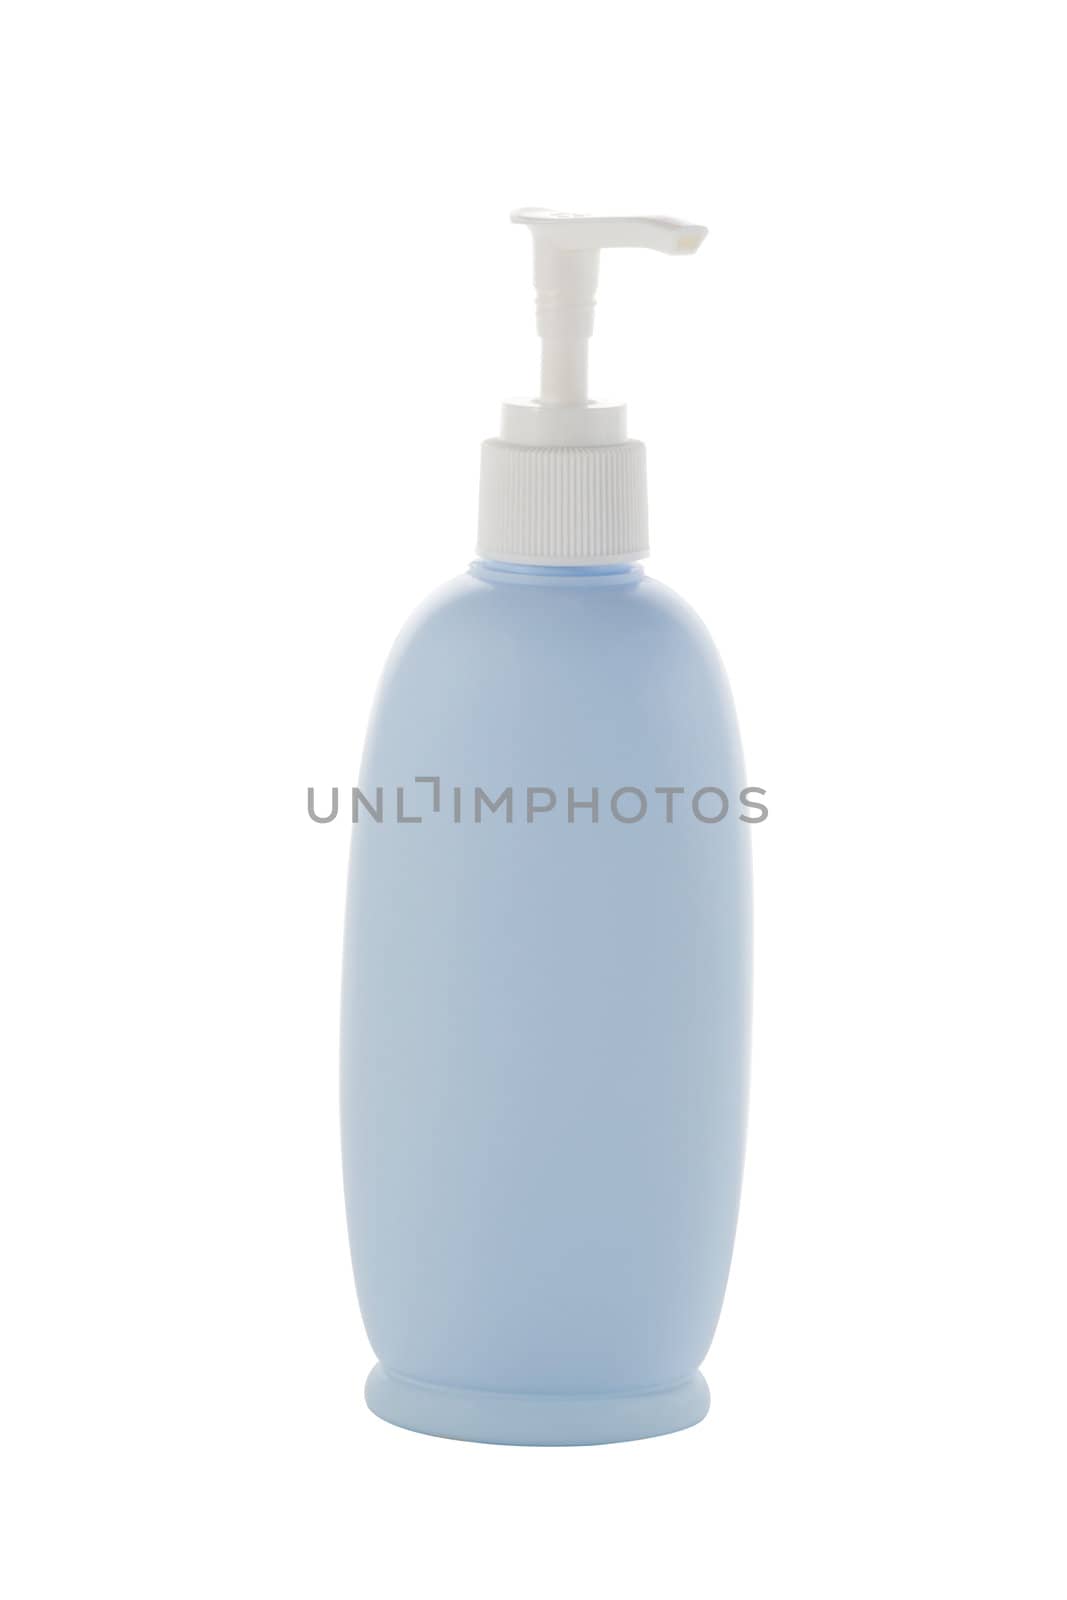 Skin care bottles on a white background